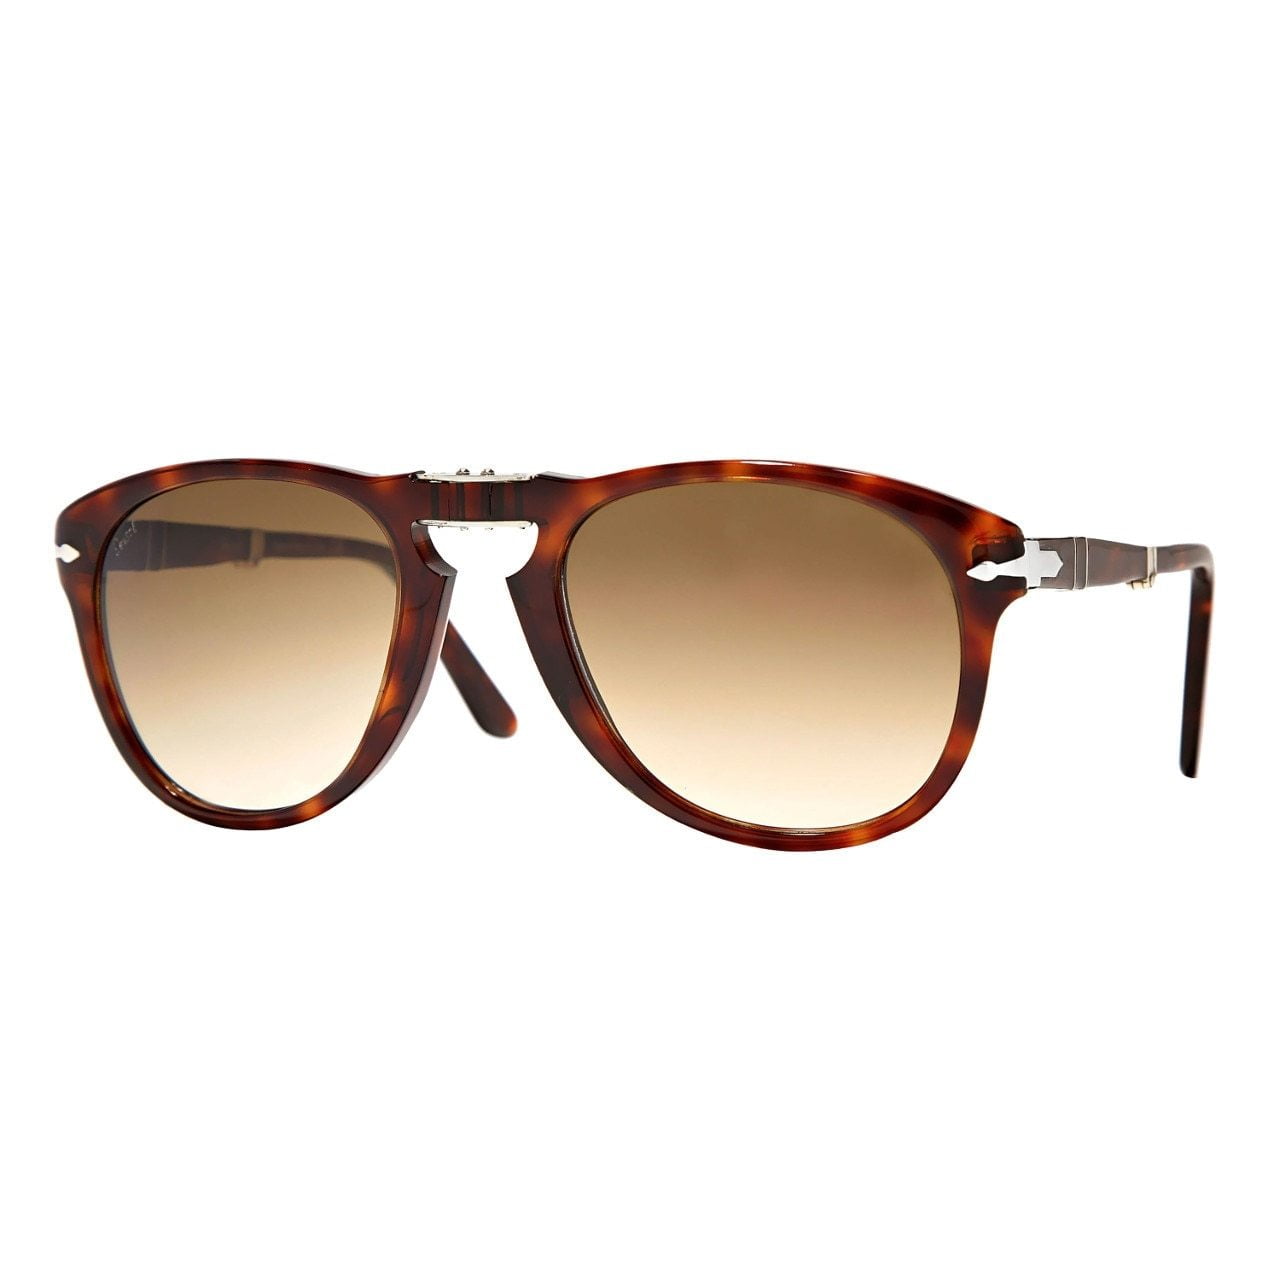 de Faret vild skærm Persol 714 Sunglasses Folding Steve McQueen - Made in Italy - Walmart.com